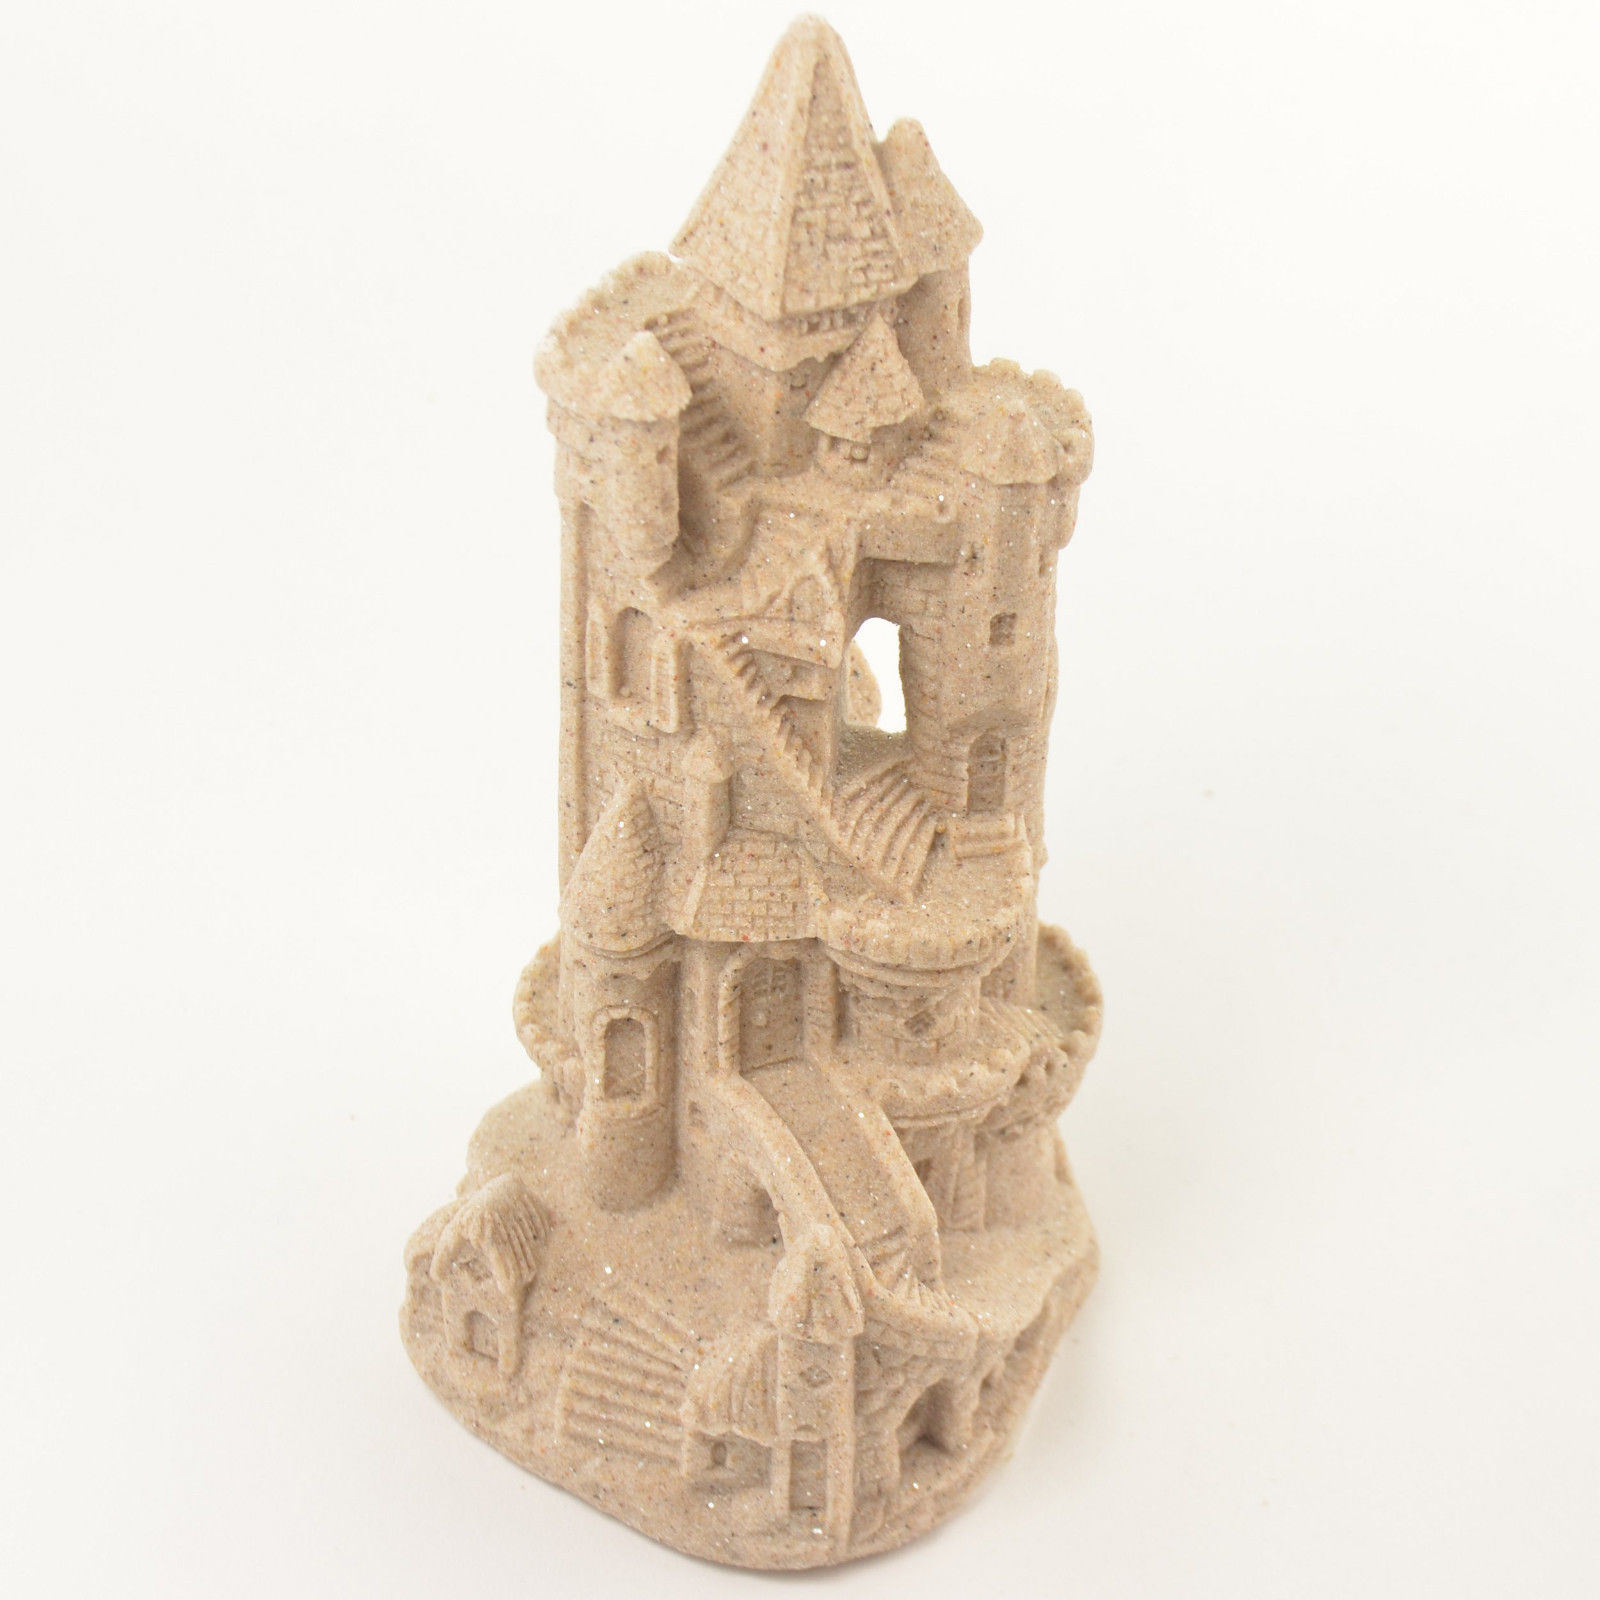 Sandman Sand Castle Figurine 465 7.25" Tall Collectible Beach Wedding Decor Mr 